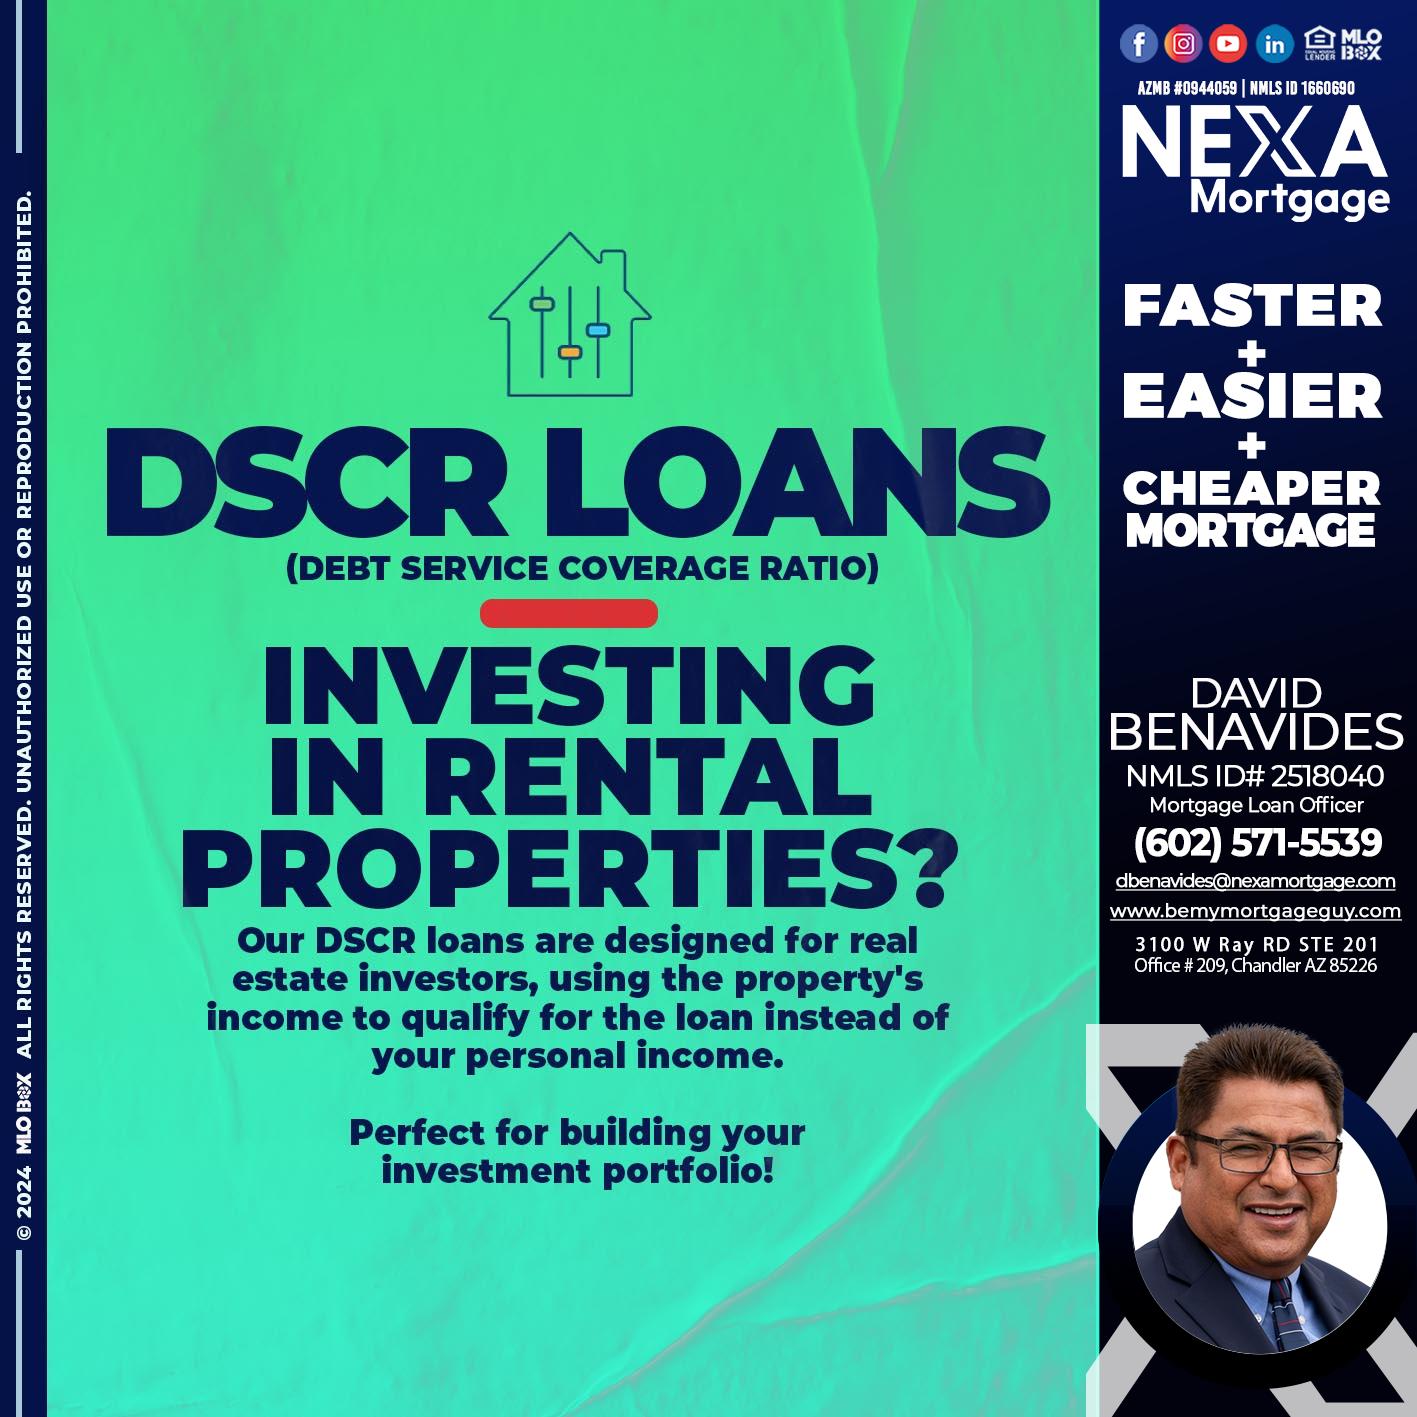 dscr loans - David Benavides -Mortgage Loan Officer